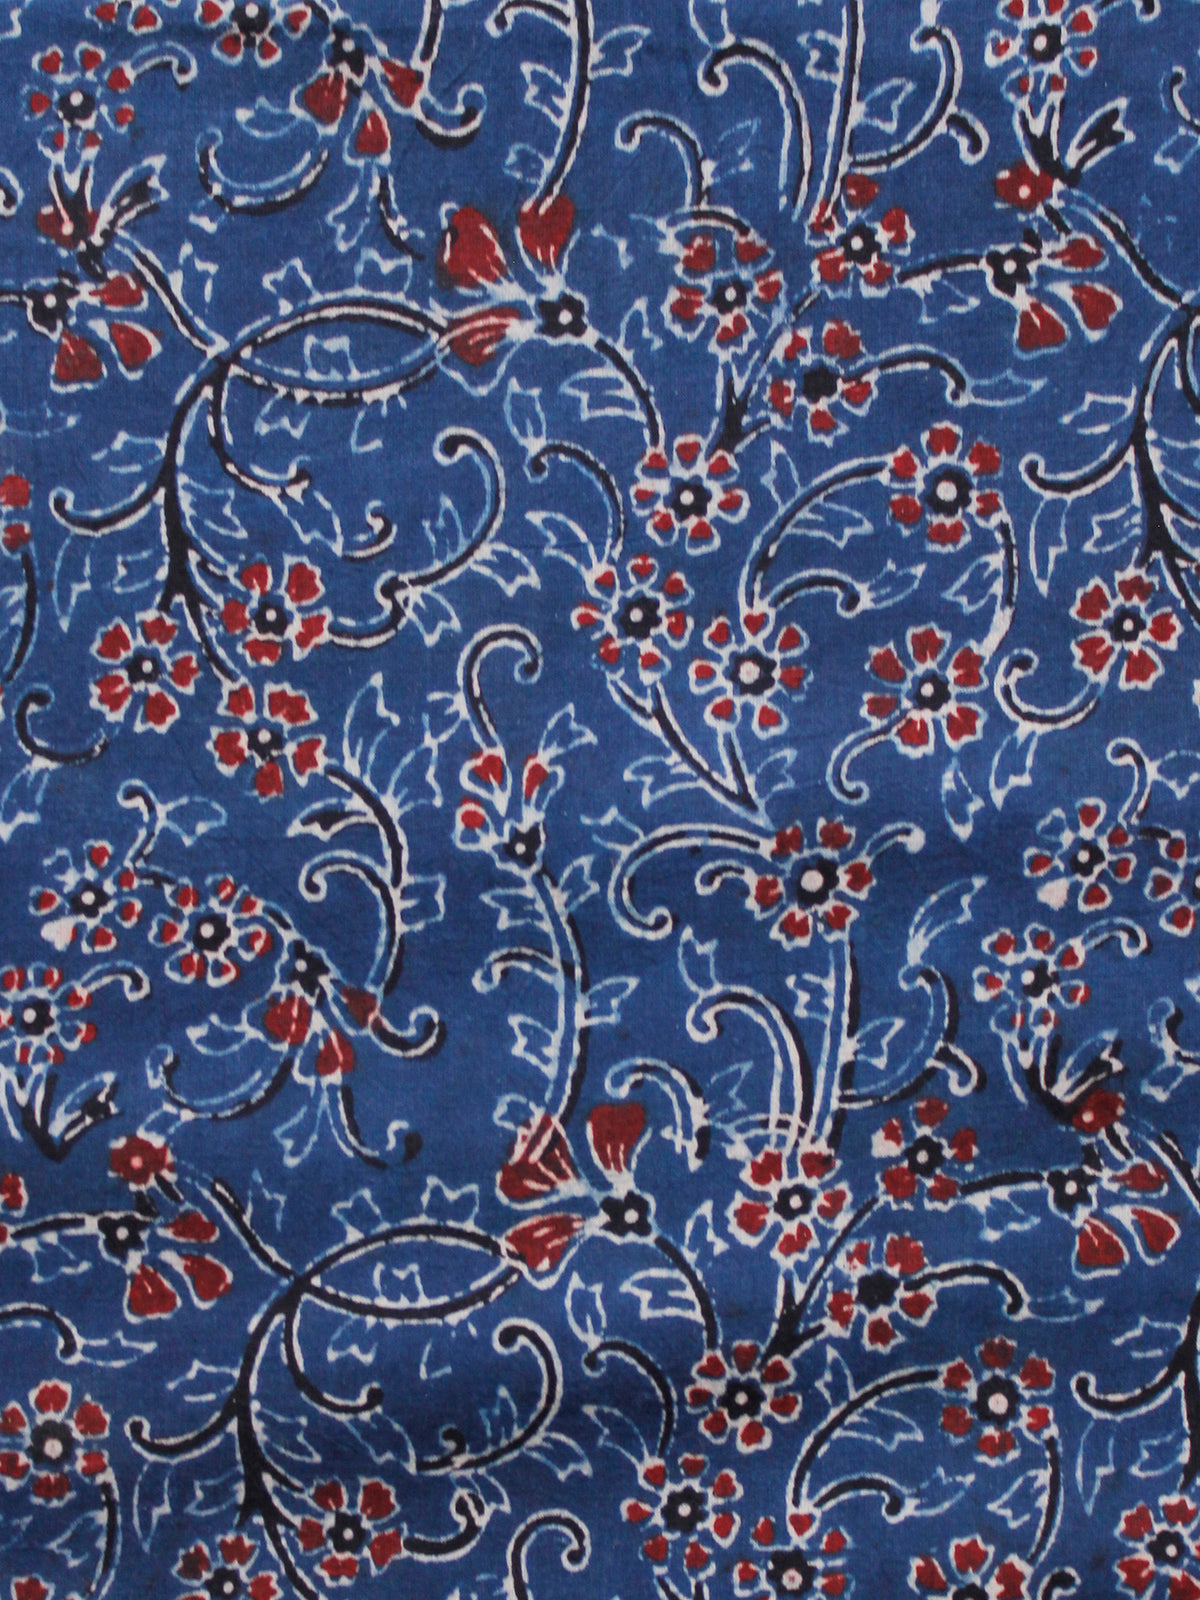 Indigo Maroon Black Ivory Ajrakh Hand Block Printed Cotton Fabric Per Meter - F003F1676